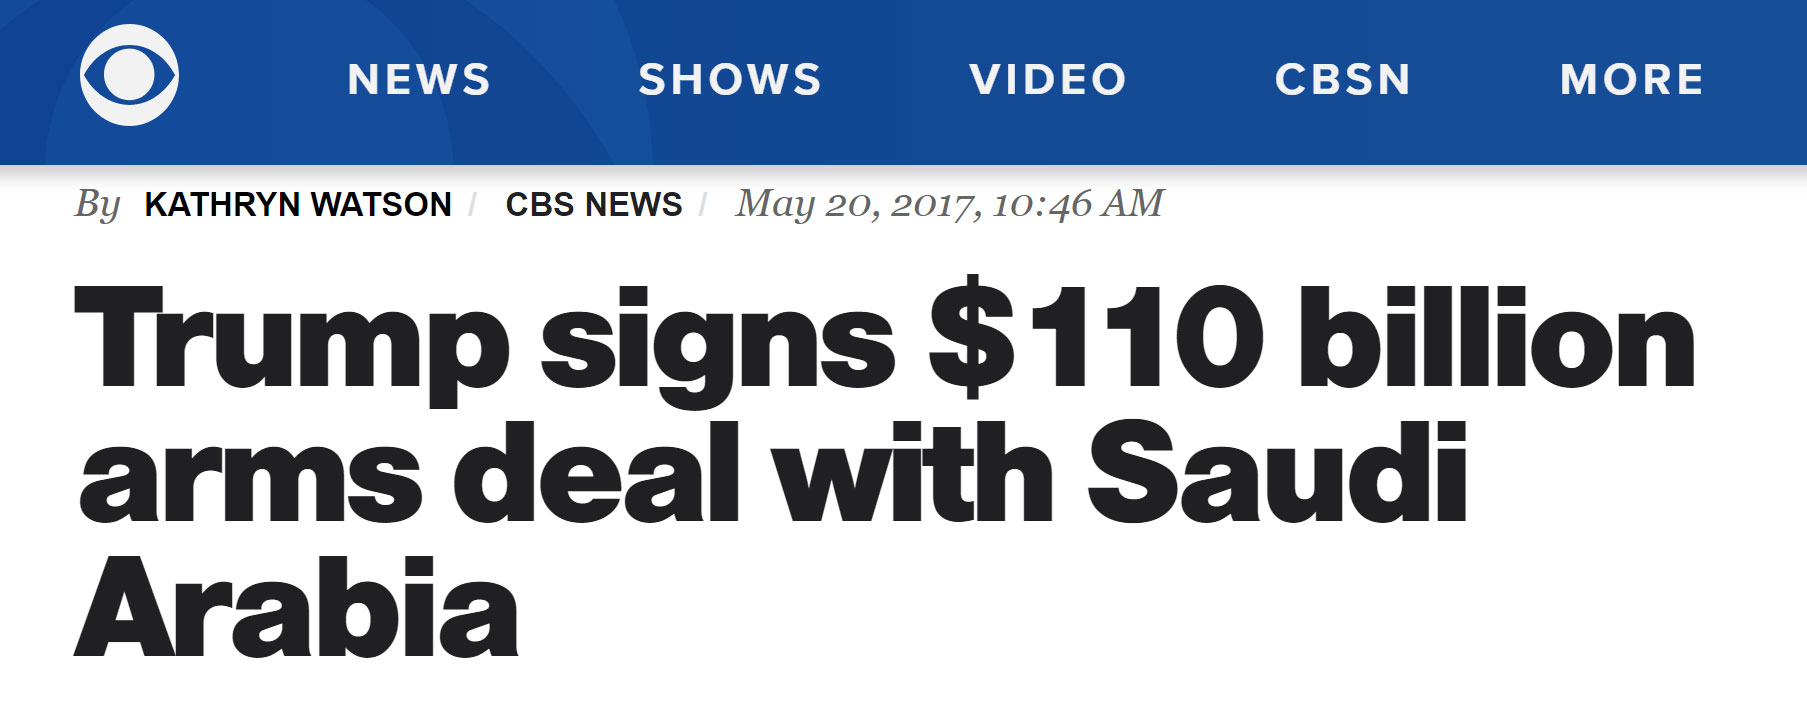 6-Trump-signs-$110-billion-arms-deal-with-Saudi-Arabia.jpg